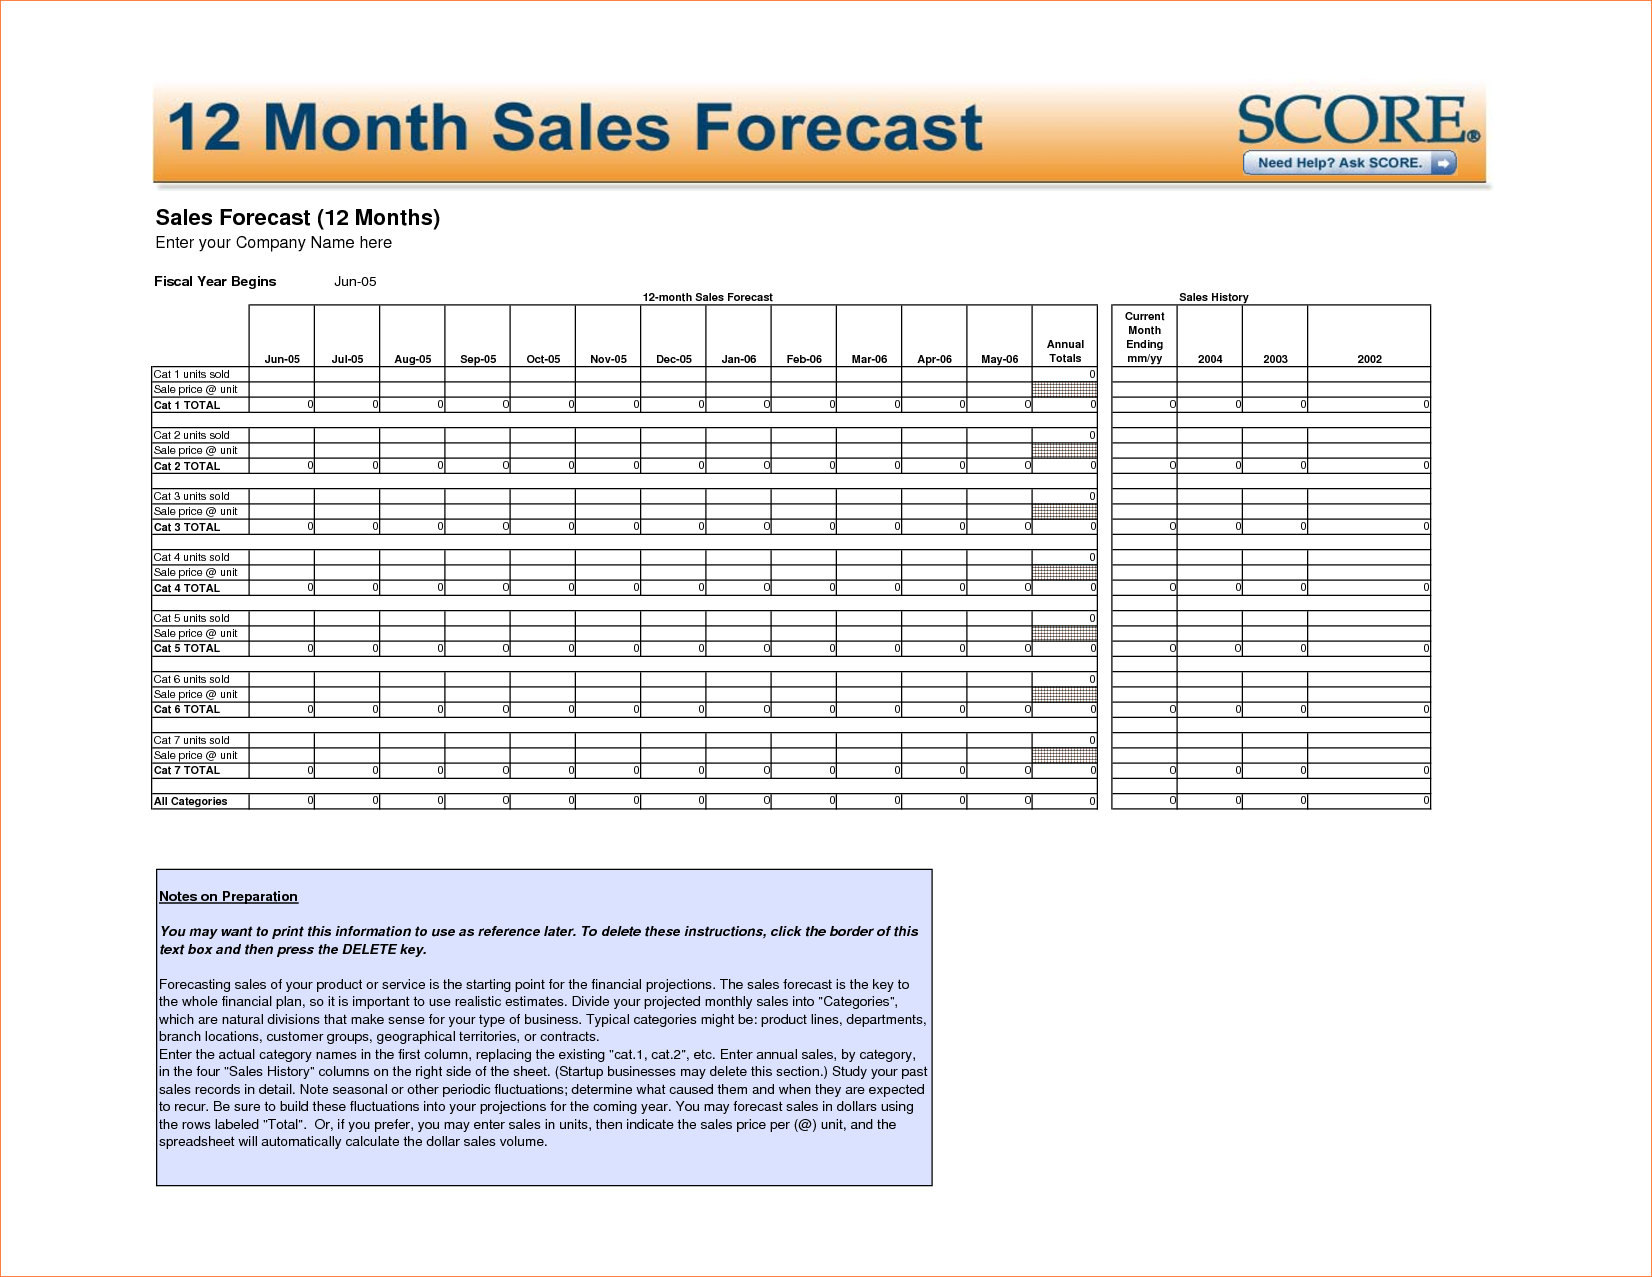 Sales Forecast Spreadsheet Template | db-excel.com